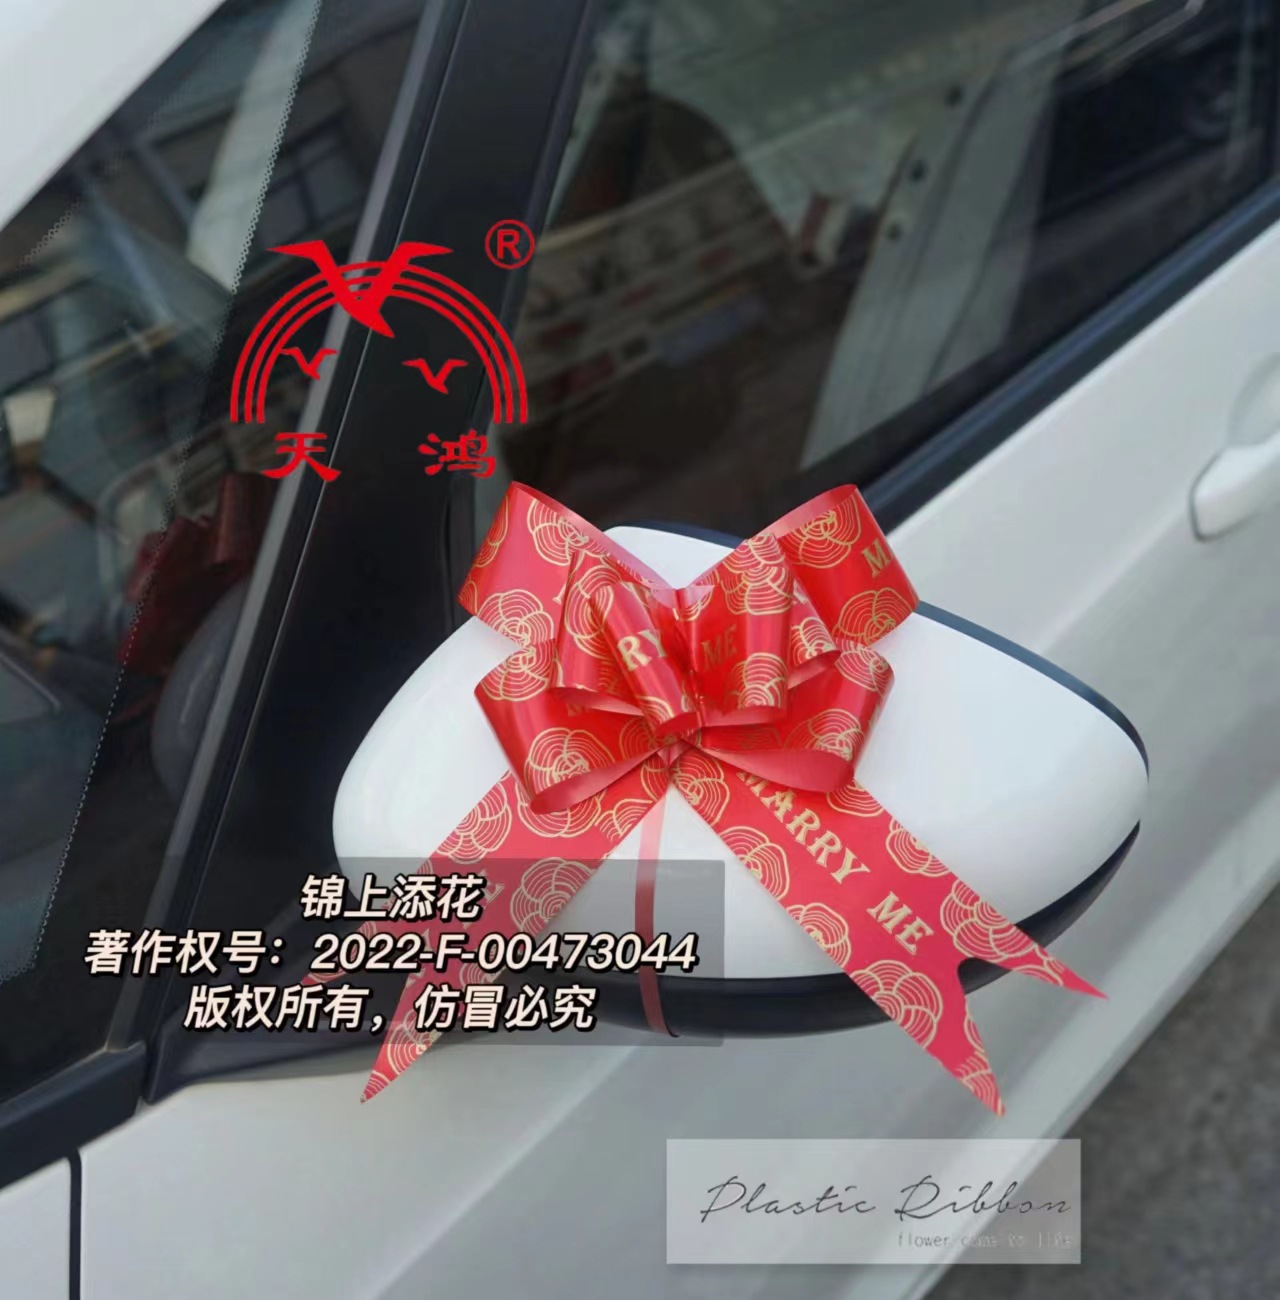 Tianhong Wedding Car Latte Art Wedding Room Celebration Ceremony Products Decorative Car Door Handle Latte Art One Pull Molding